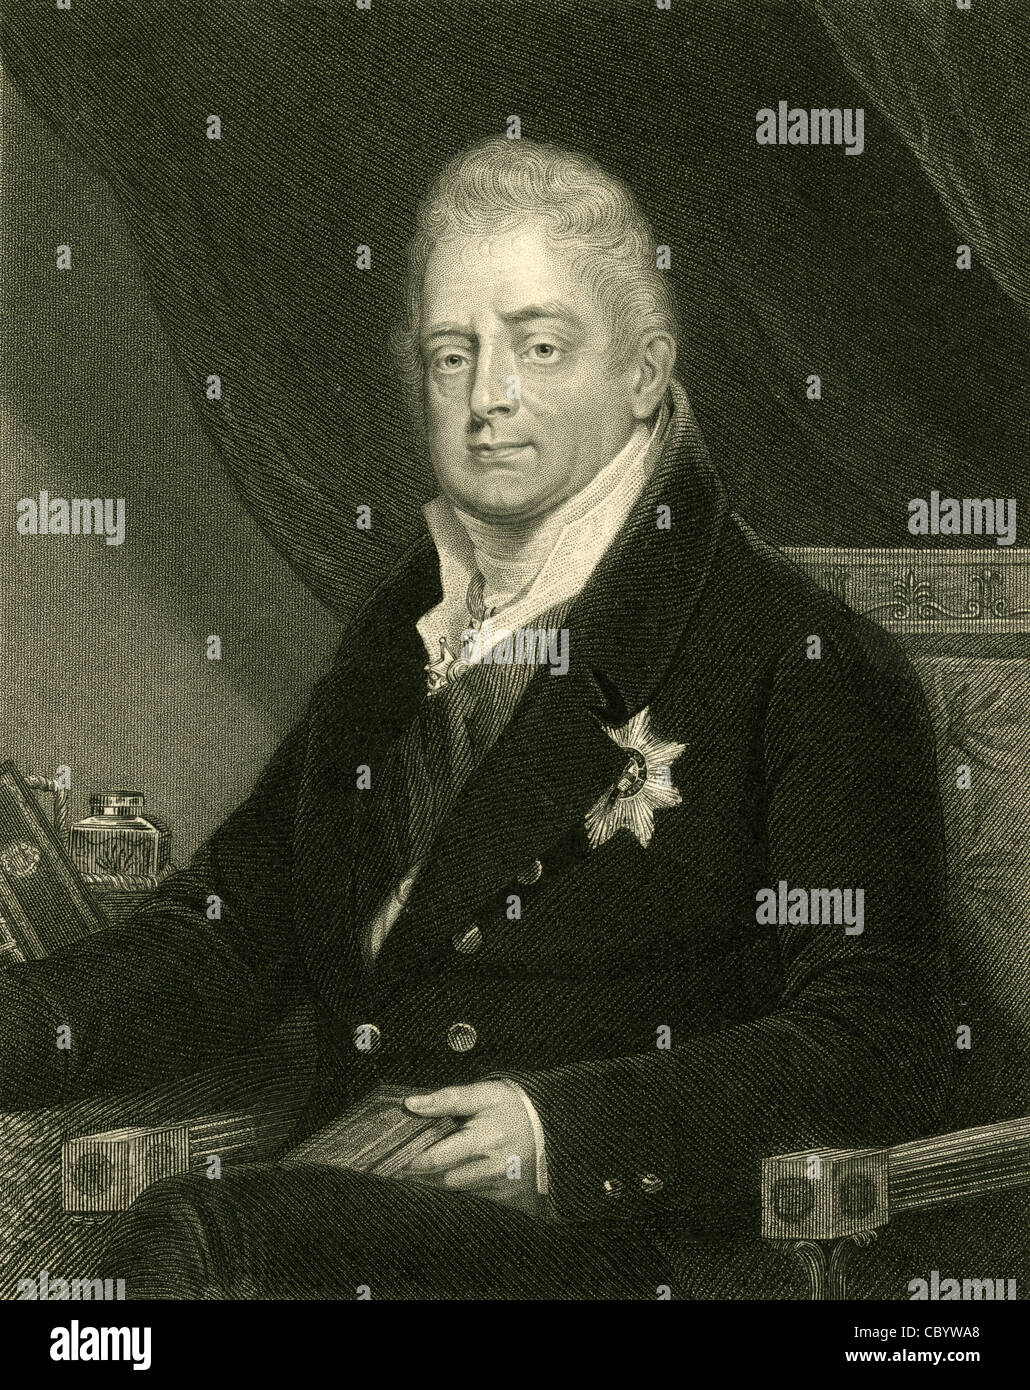 1831 engraving, William IV of the United Kingdom. Stock Photo